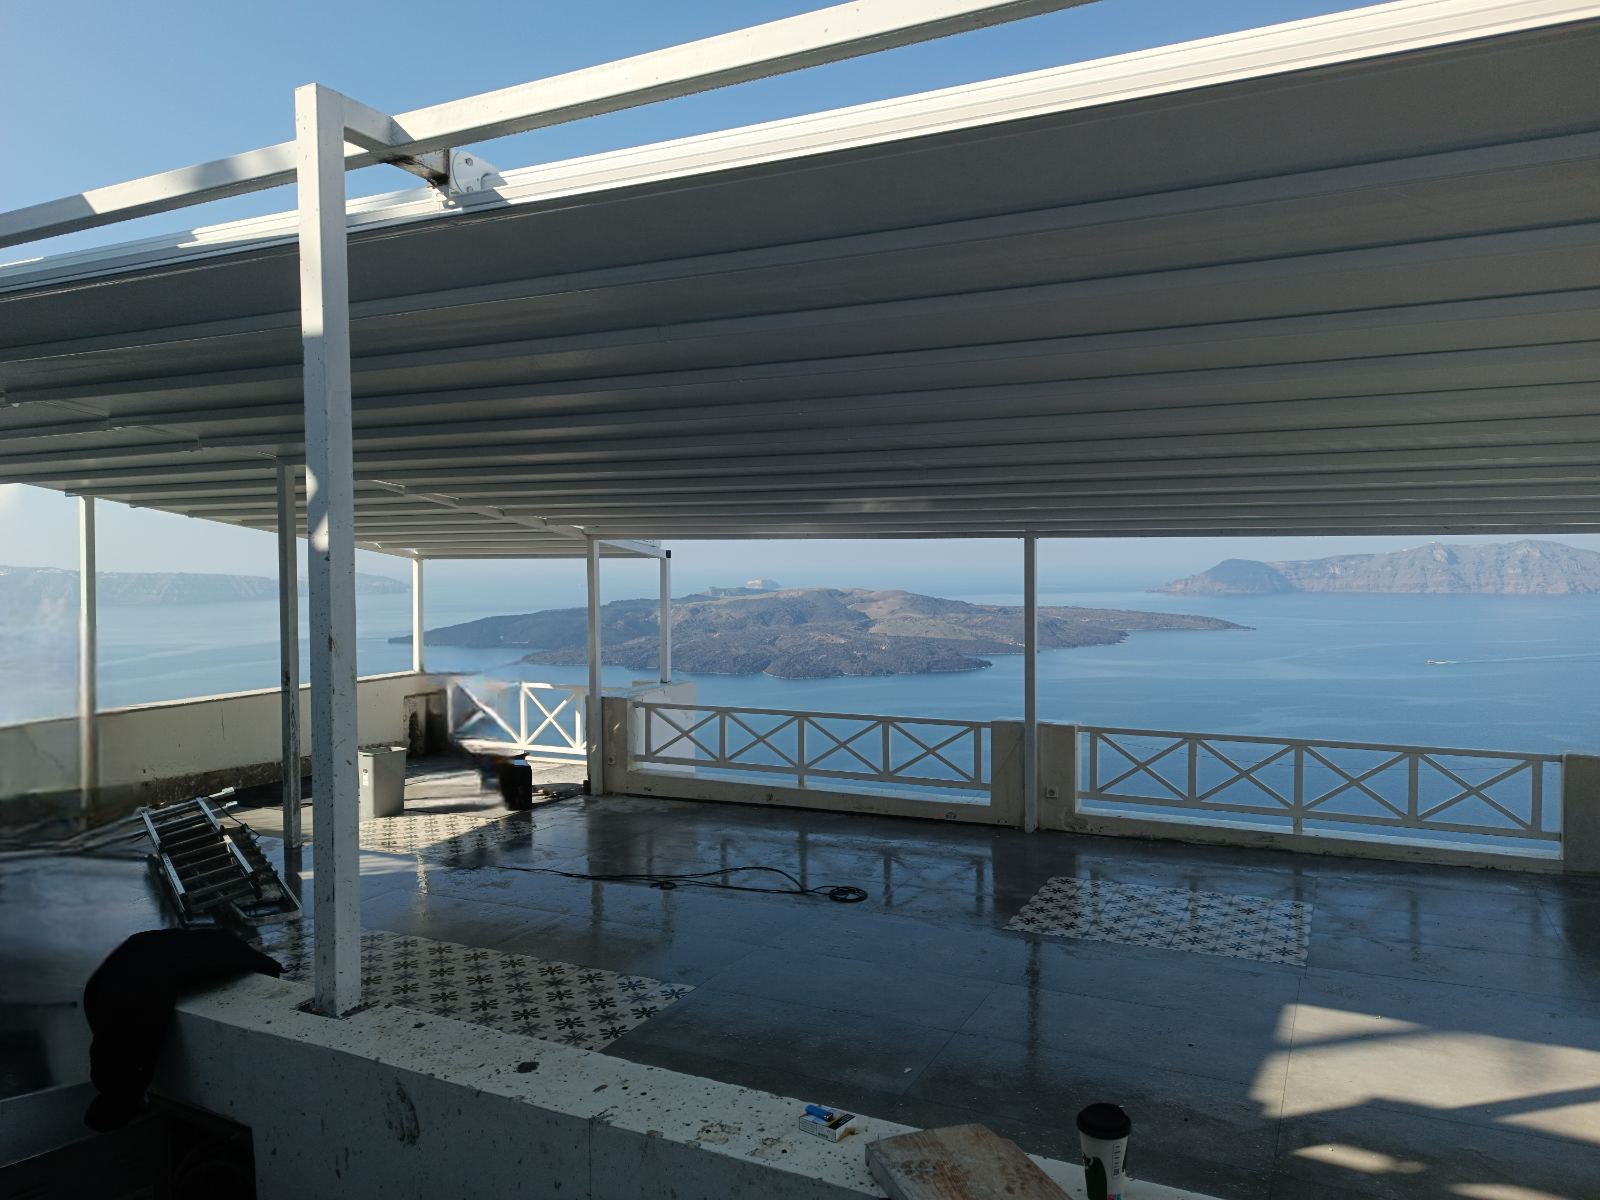 Pergola awning system Santorini